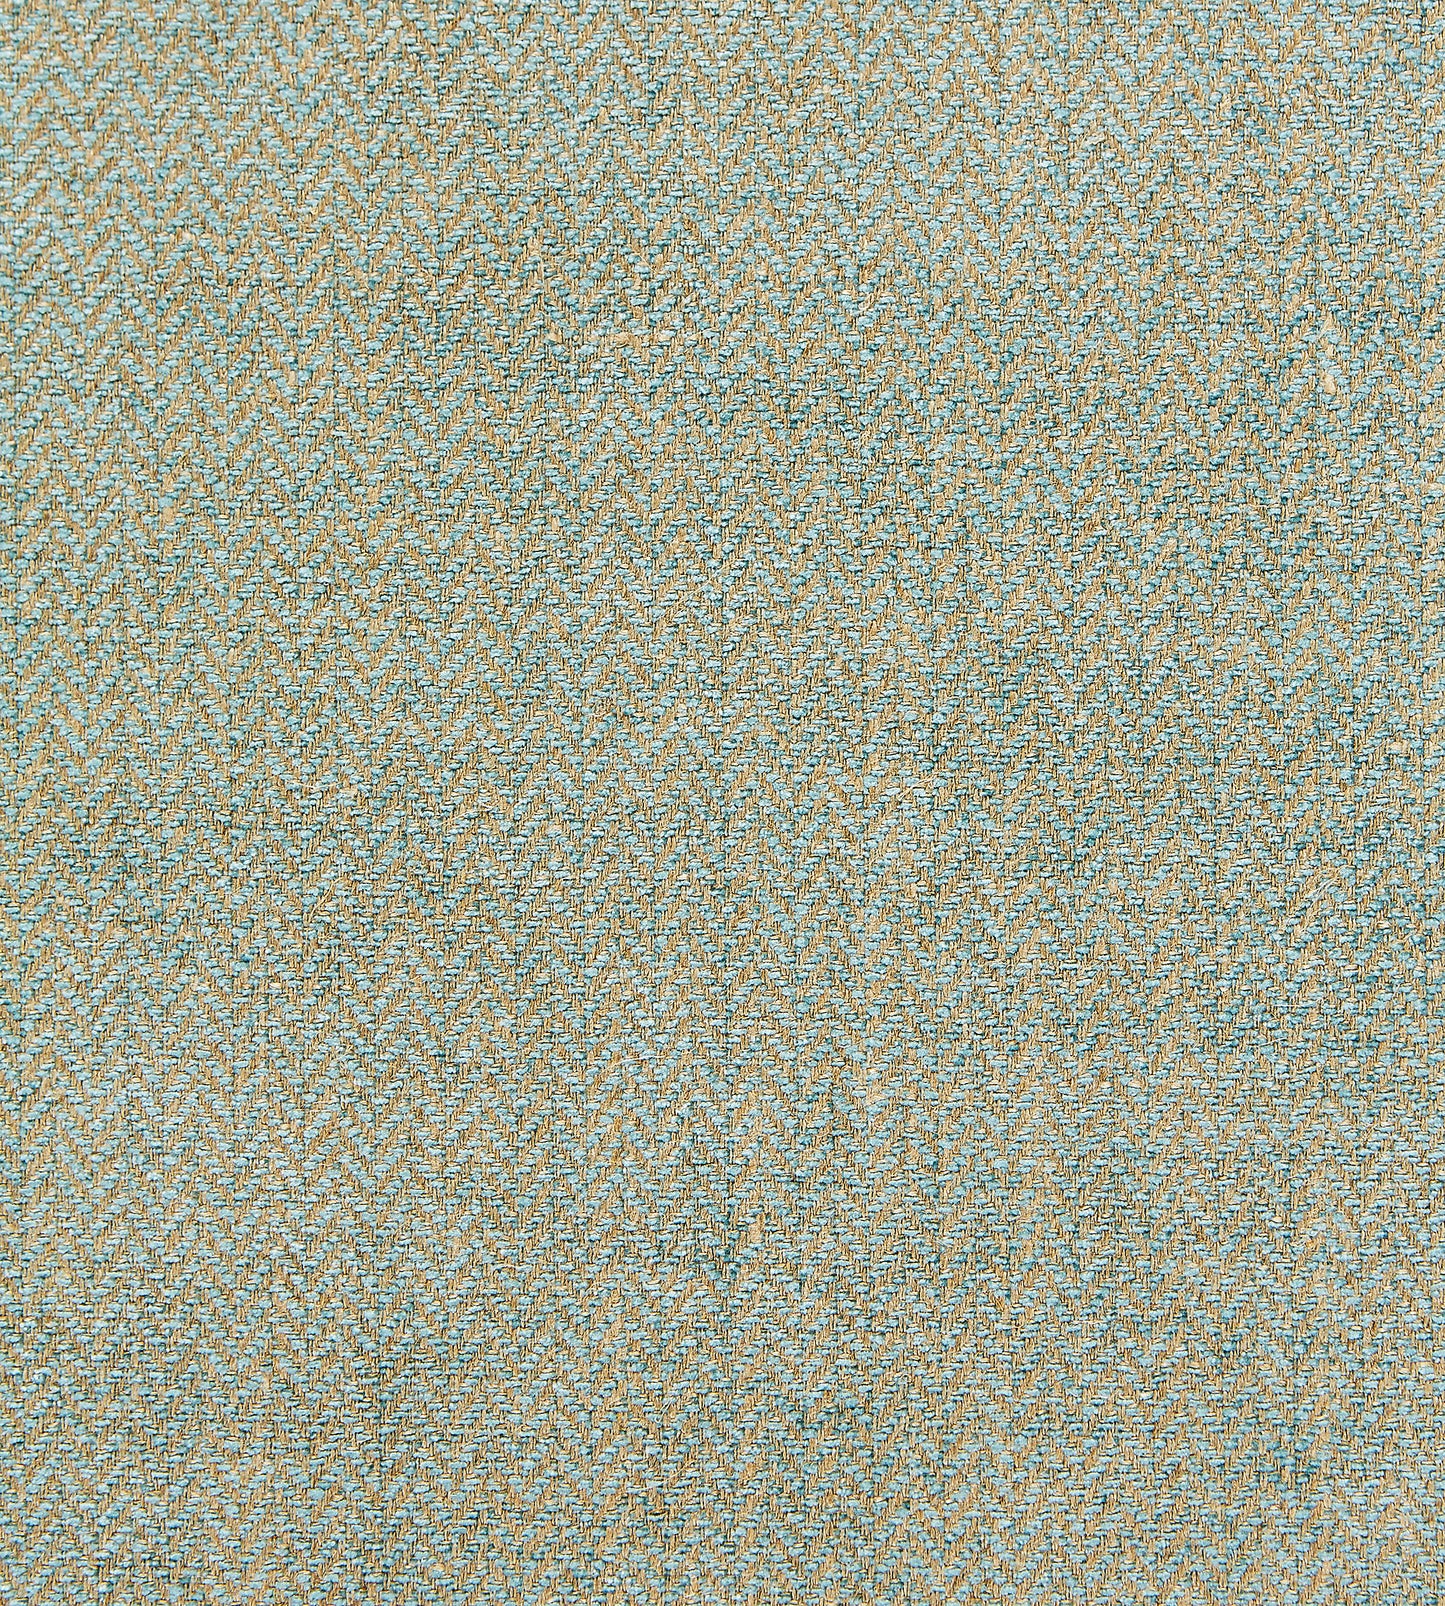 Purchase Scalamandre Fabric Pattern number SC 002027006, Oxford Herringbone Weave Aquamarine 1